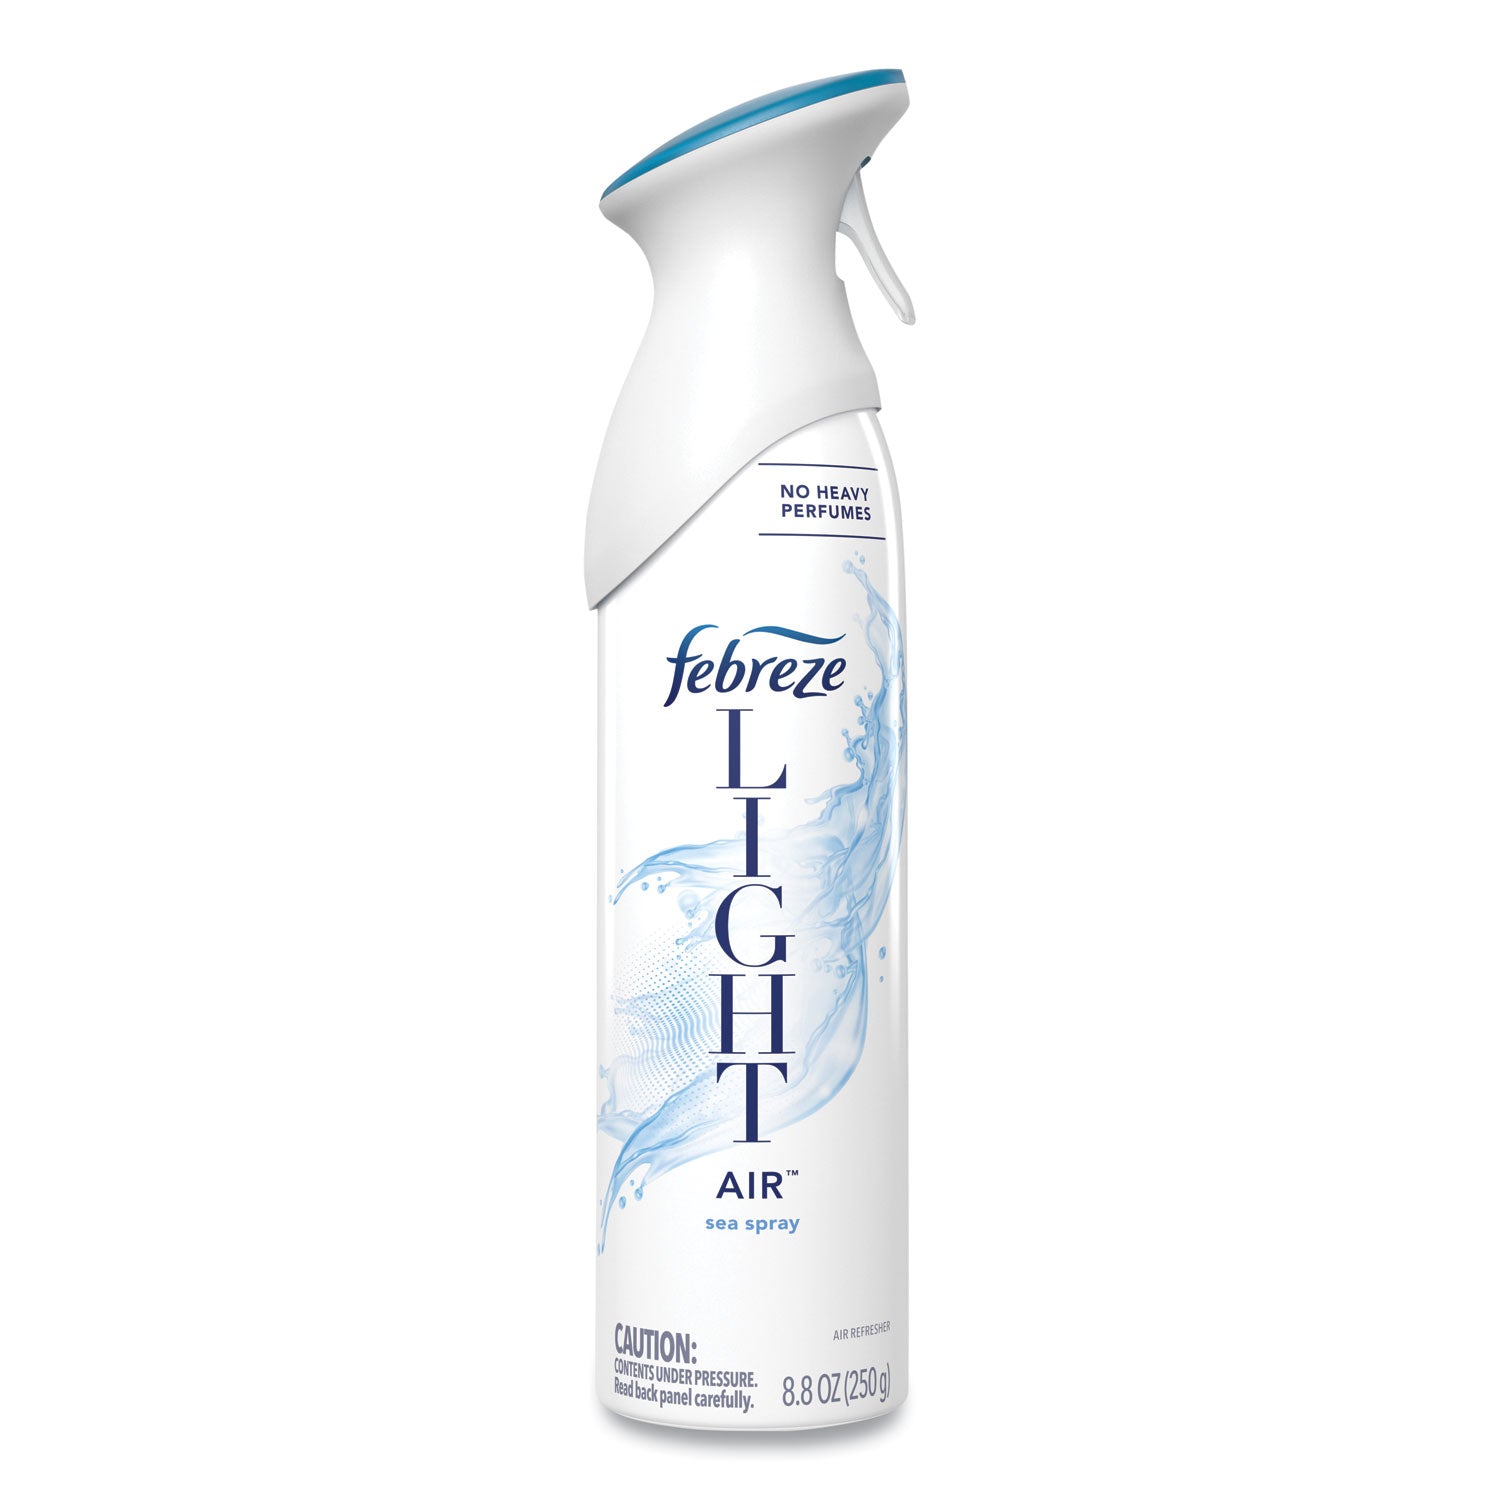 air-sea-spray-scent-88-oz-aerosol-spray_pgc62983 - 1